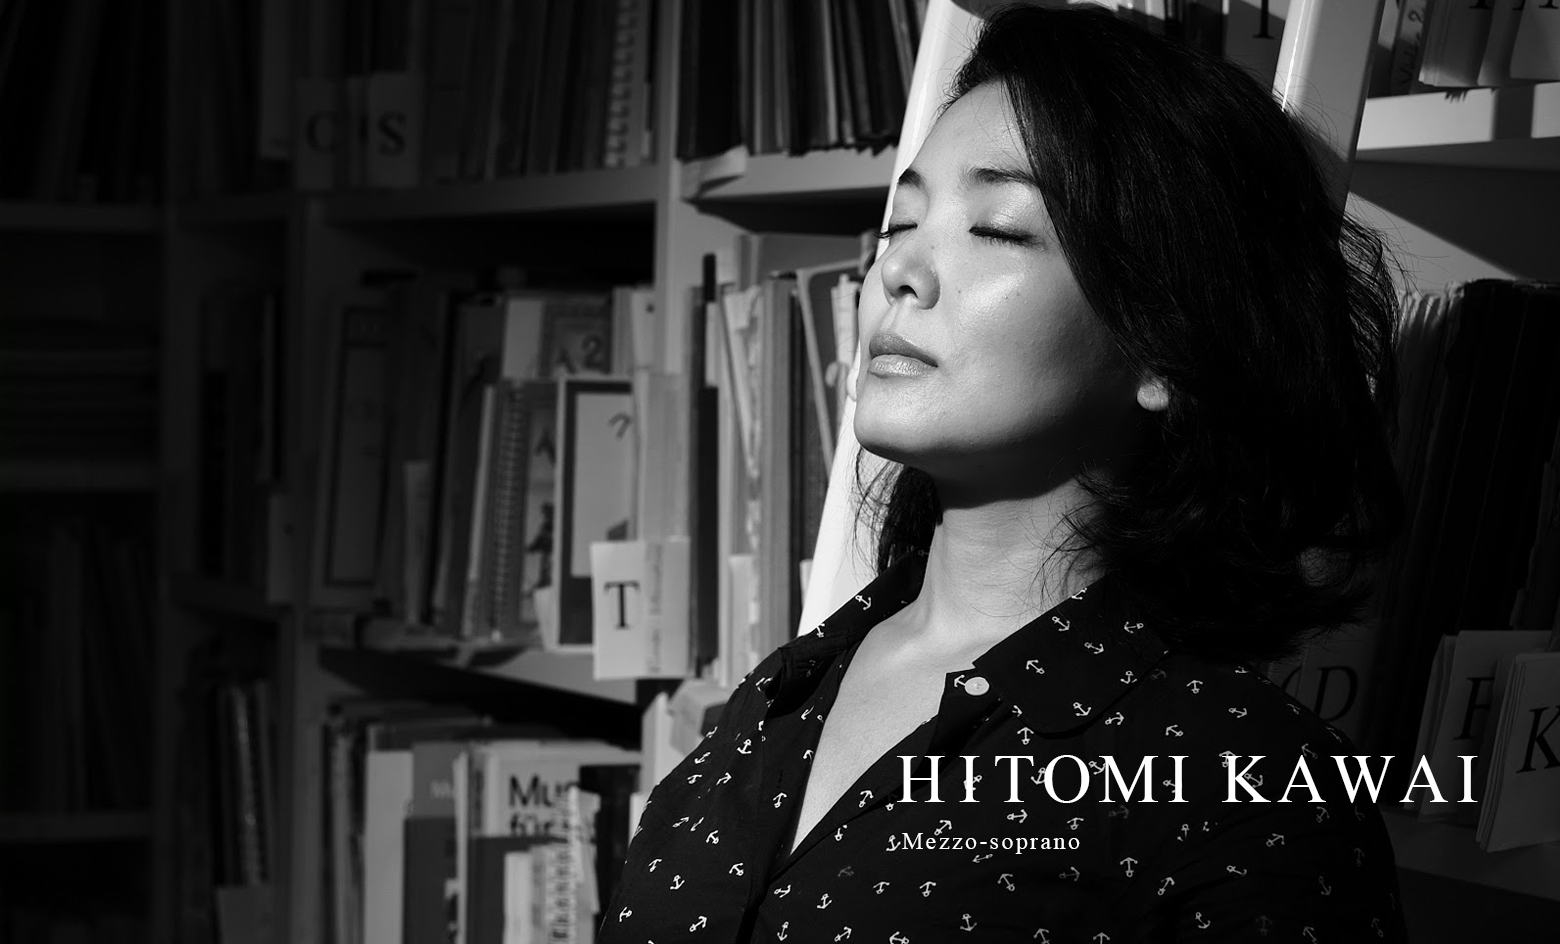 Hitomi Kawai Mezzo-soprano